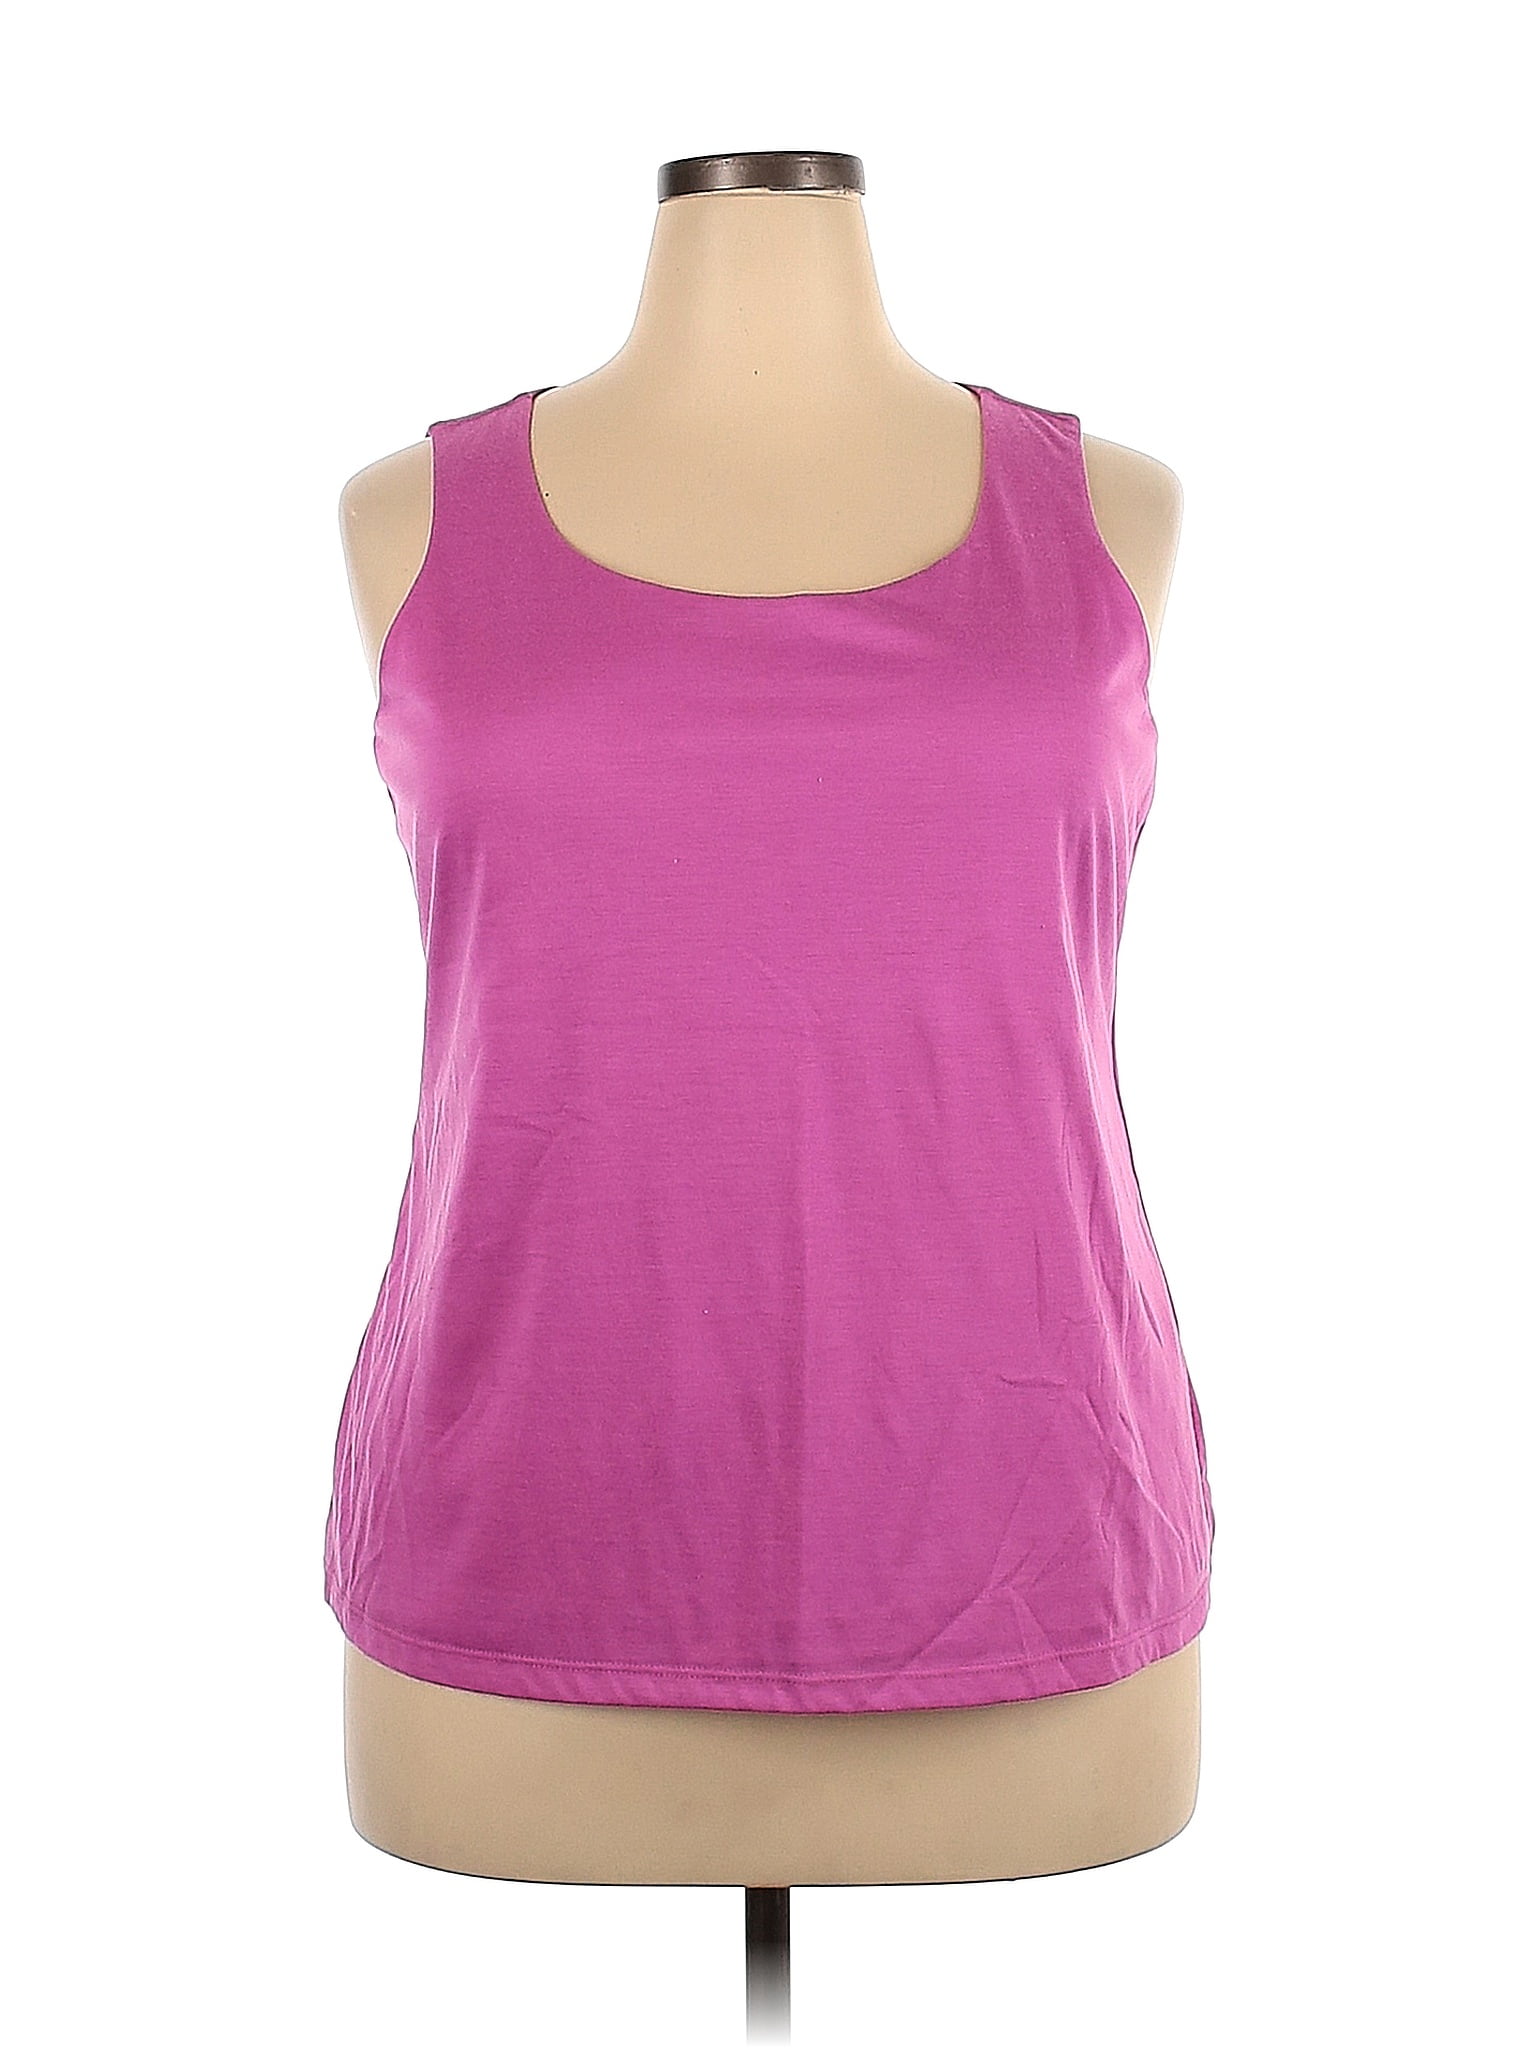 Sejour Pink Sleeveless T-Shirt Size 2X (Plus) - 59% off | thredUP